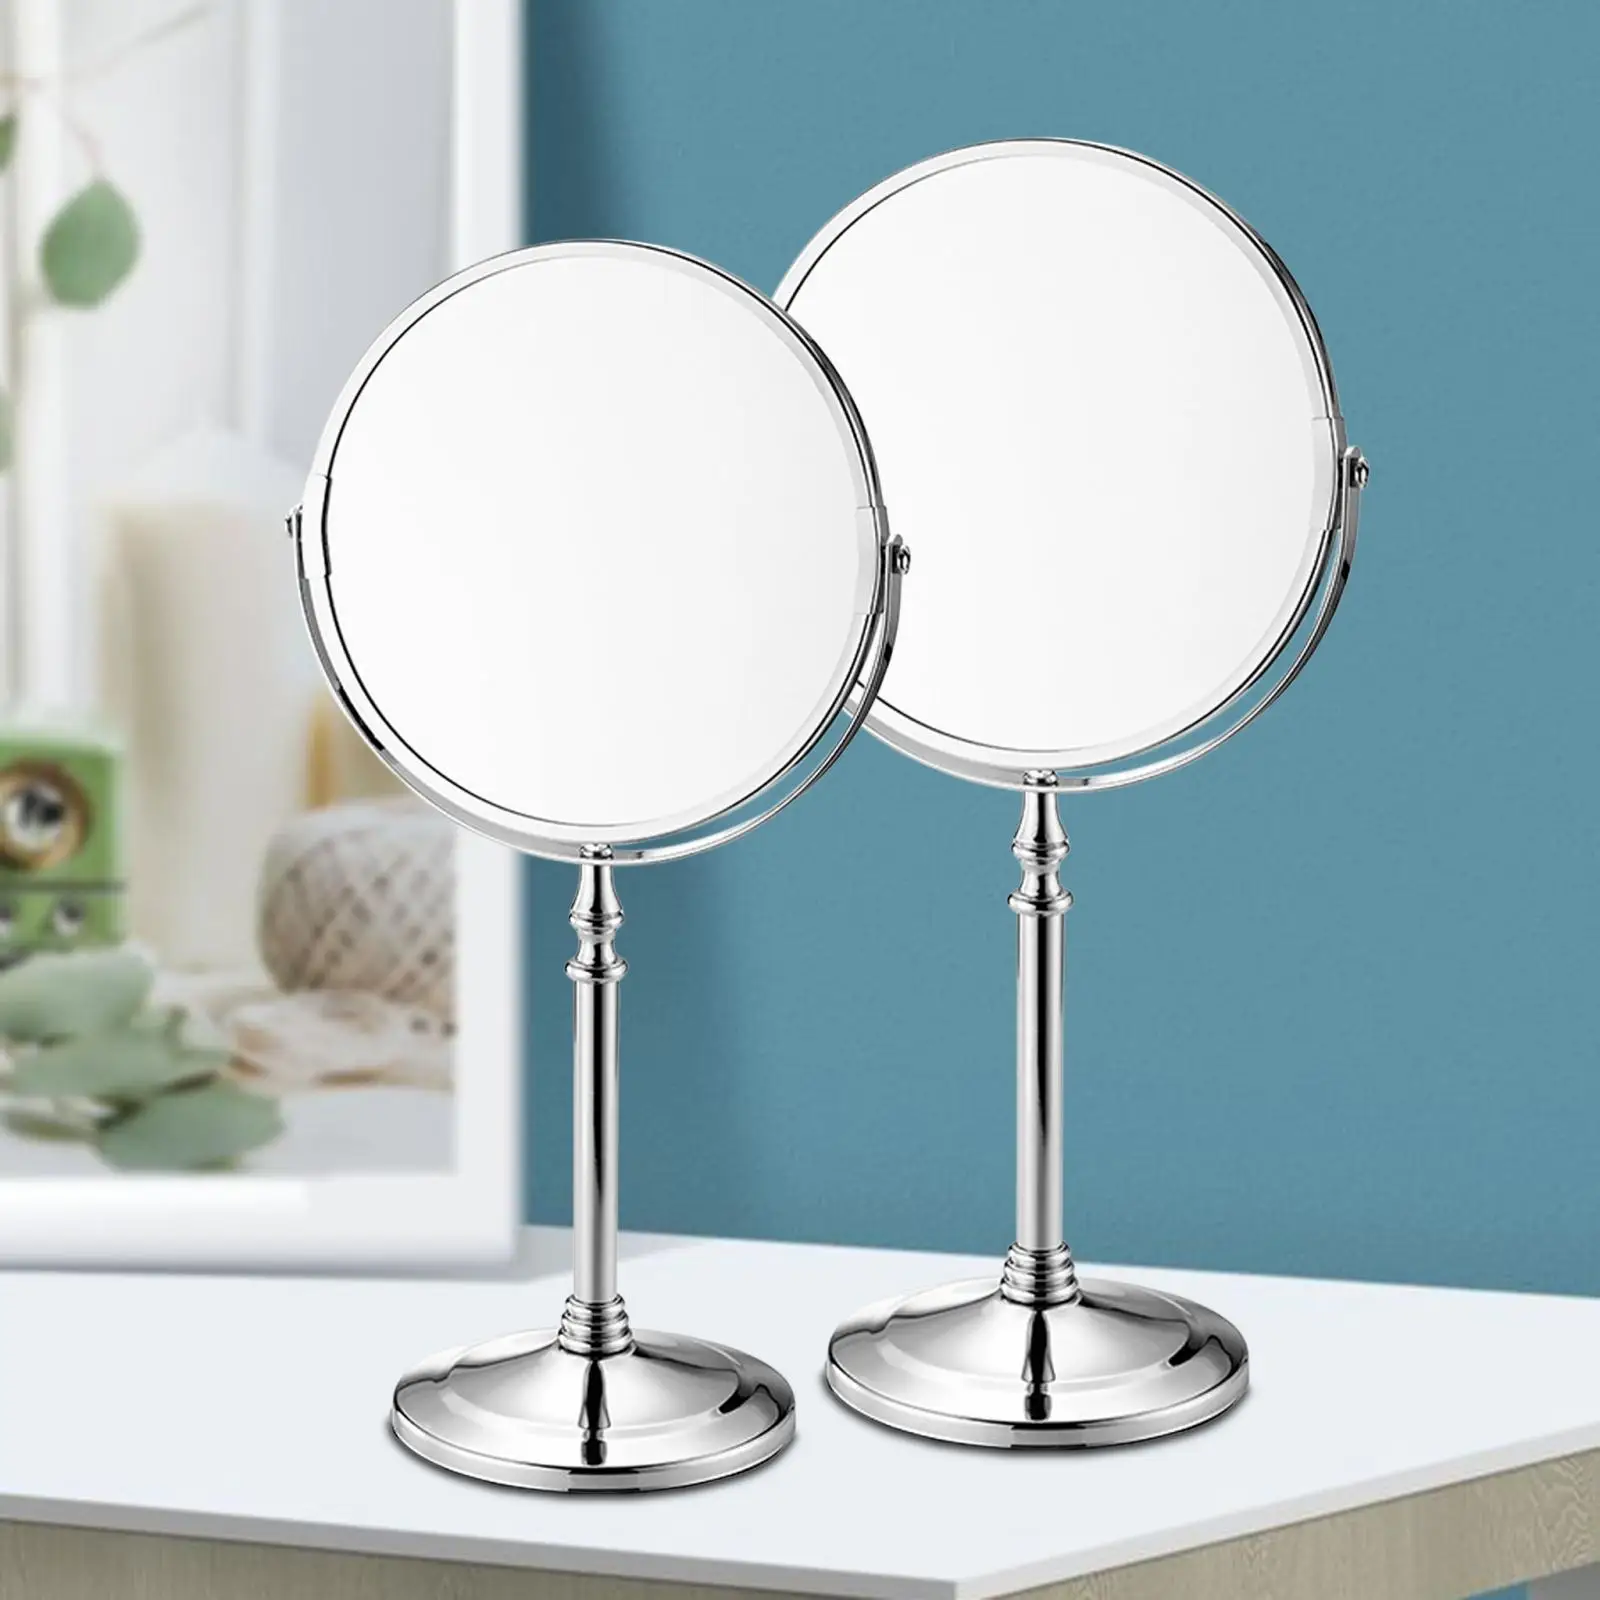 Makeup Mirror Decorative Round Vanity Makeup Mirror Tabletop Cosmetic Mirror for Home Dressing Table Bathroom Dresser Bedroom